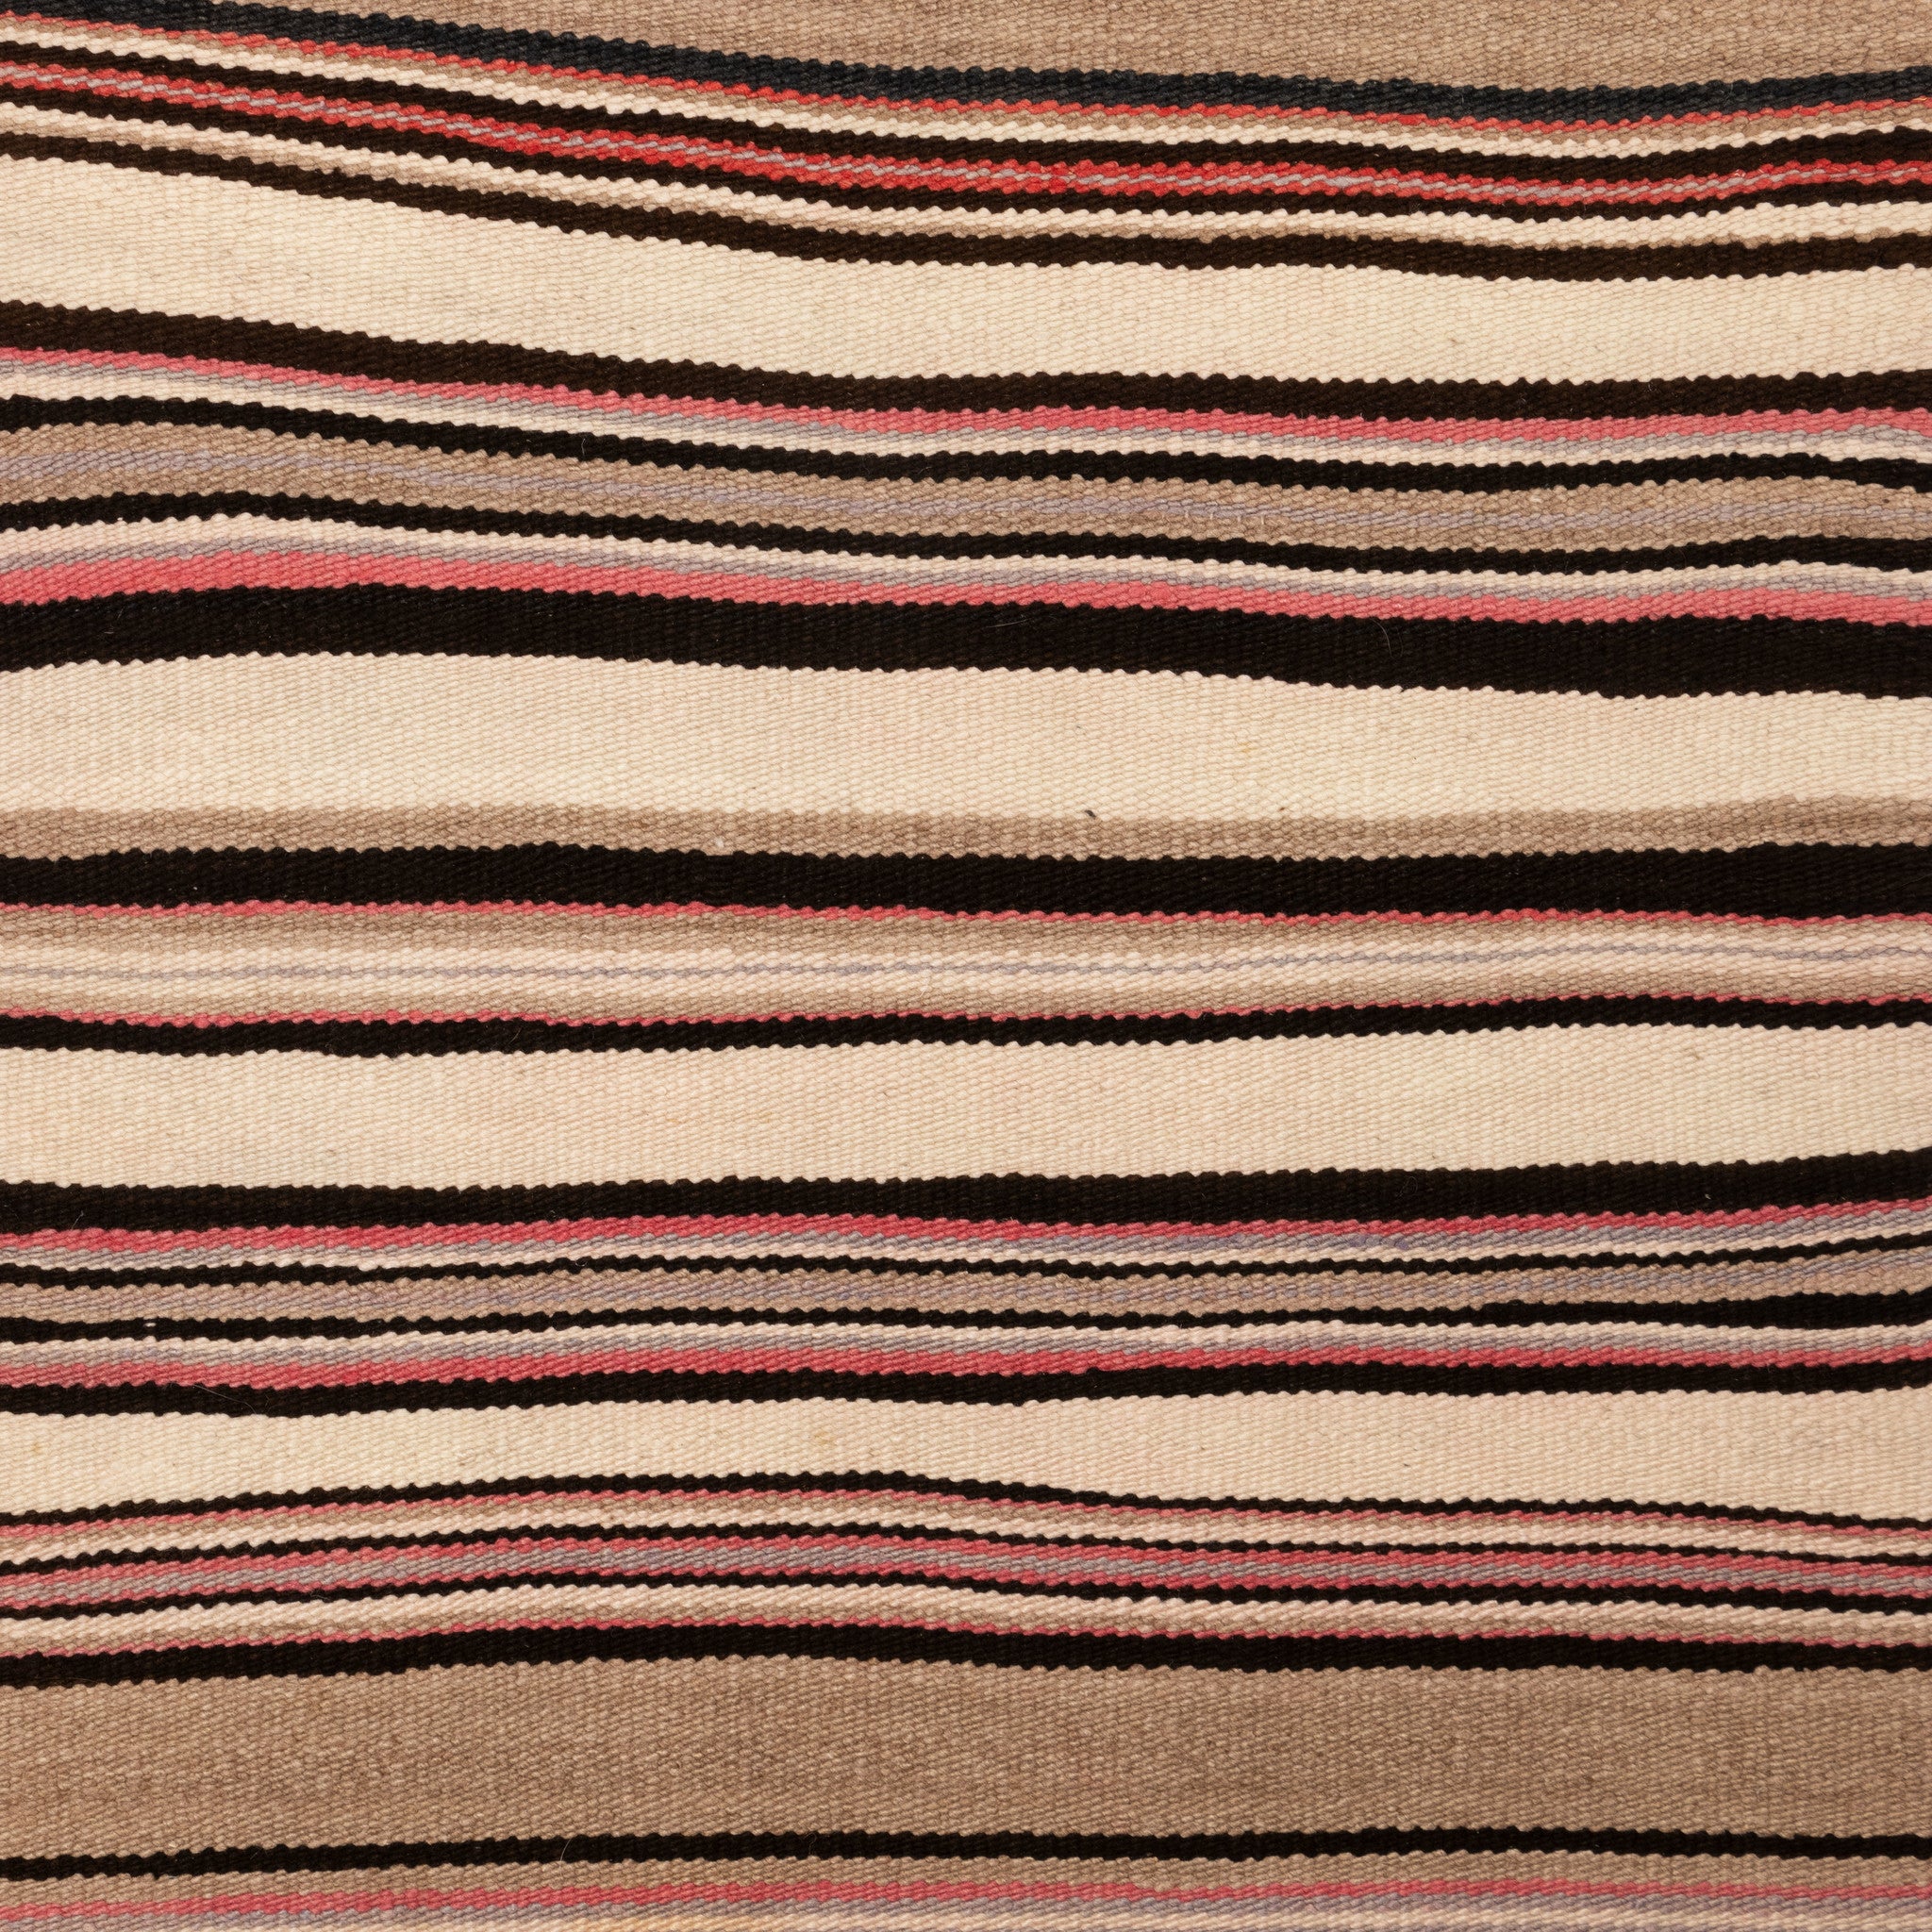 Navajo Double Saddle Blanket